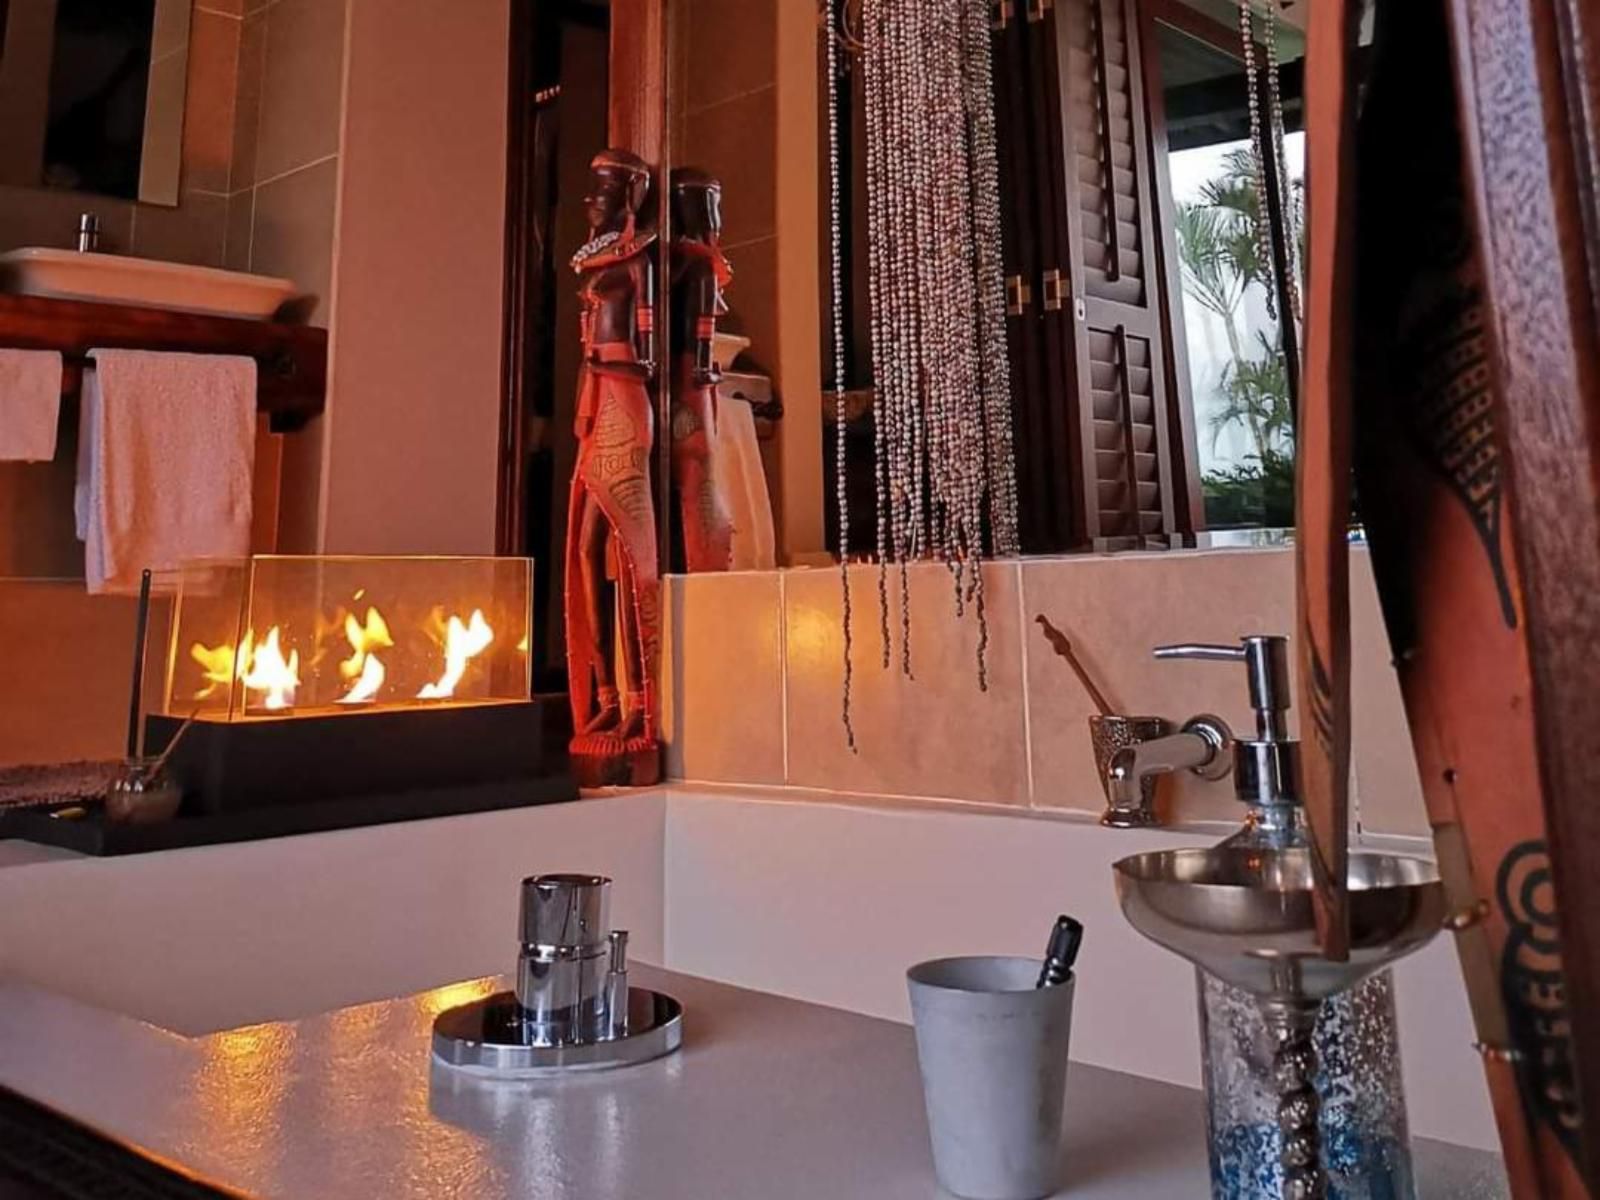 Jakita S Guest House Ballito Kwazulu Natal South Africa Fire, Nature, Bathroom